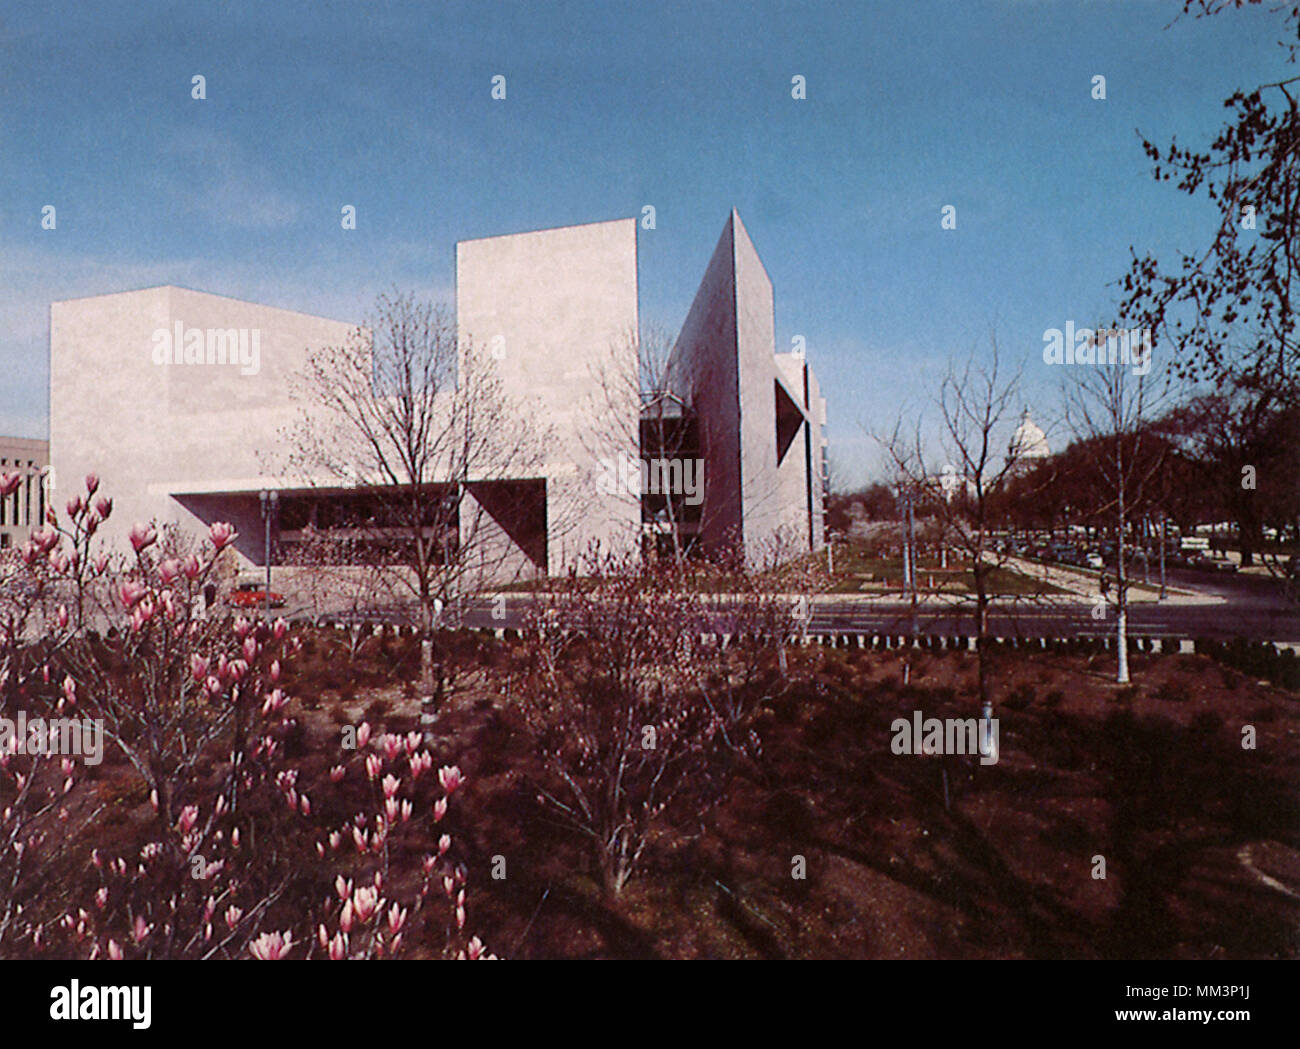 National Gallery of Art de Washington DC. 1986 Banque D'Images